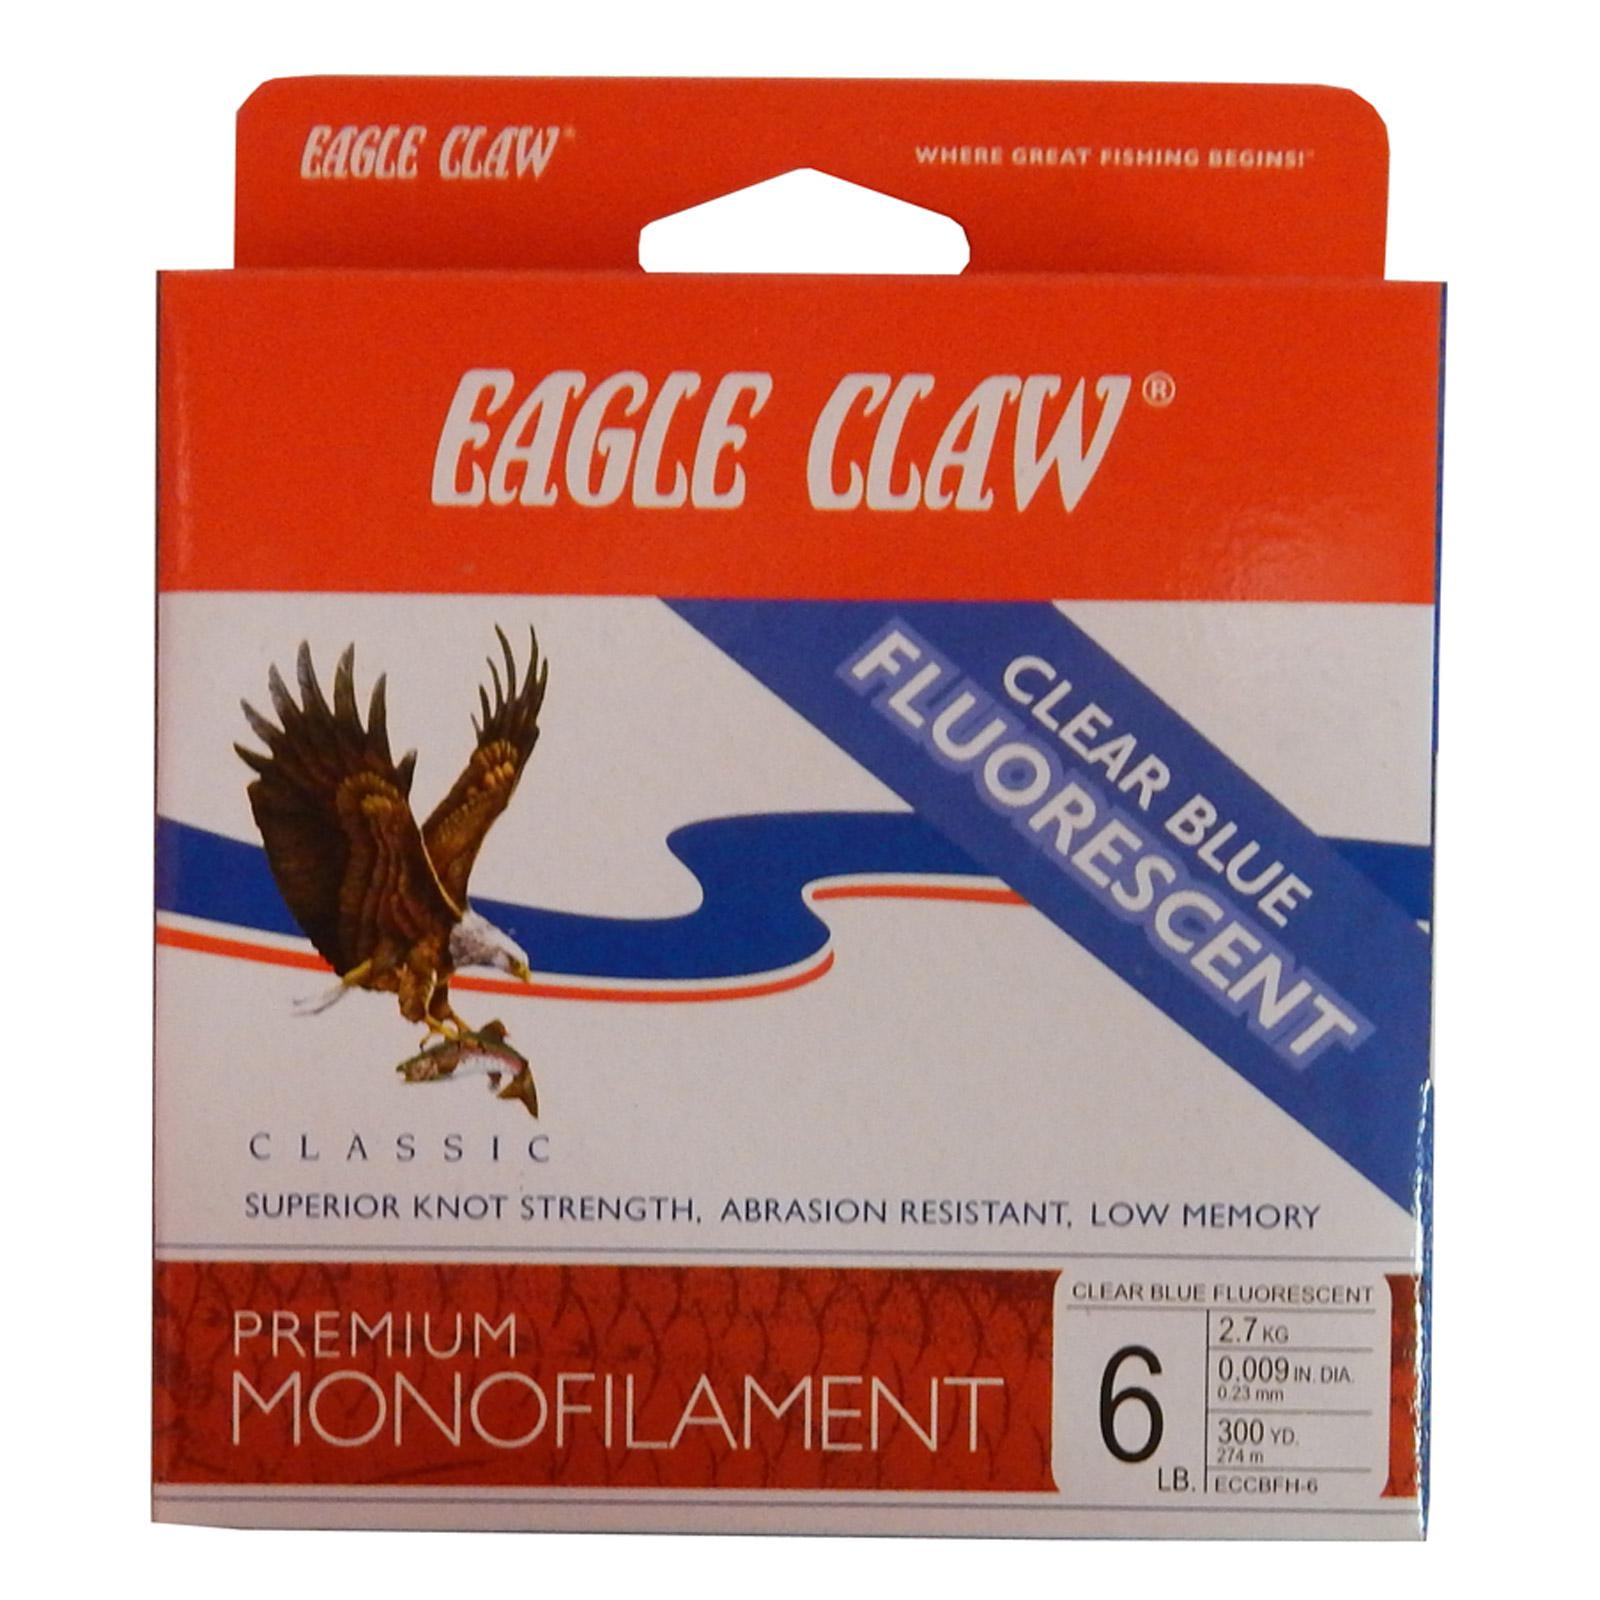 Eagle Claw clear 12 lb test fishing line 1000 yds 